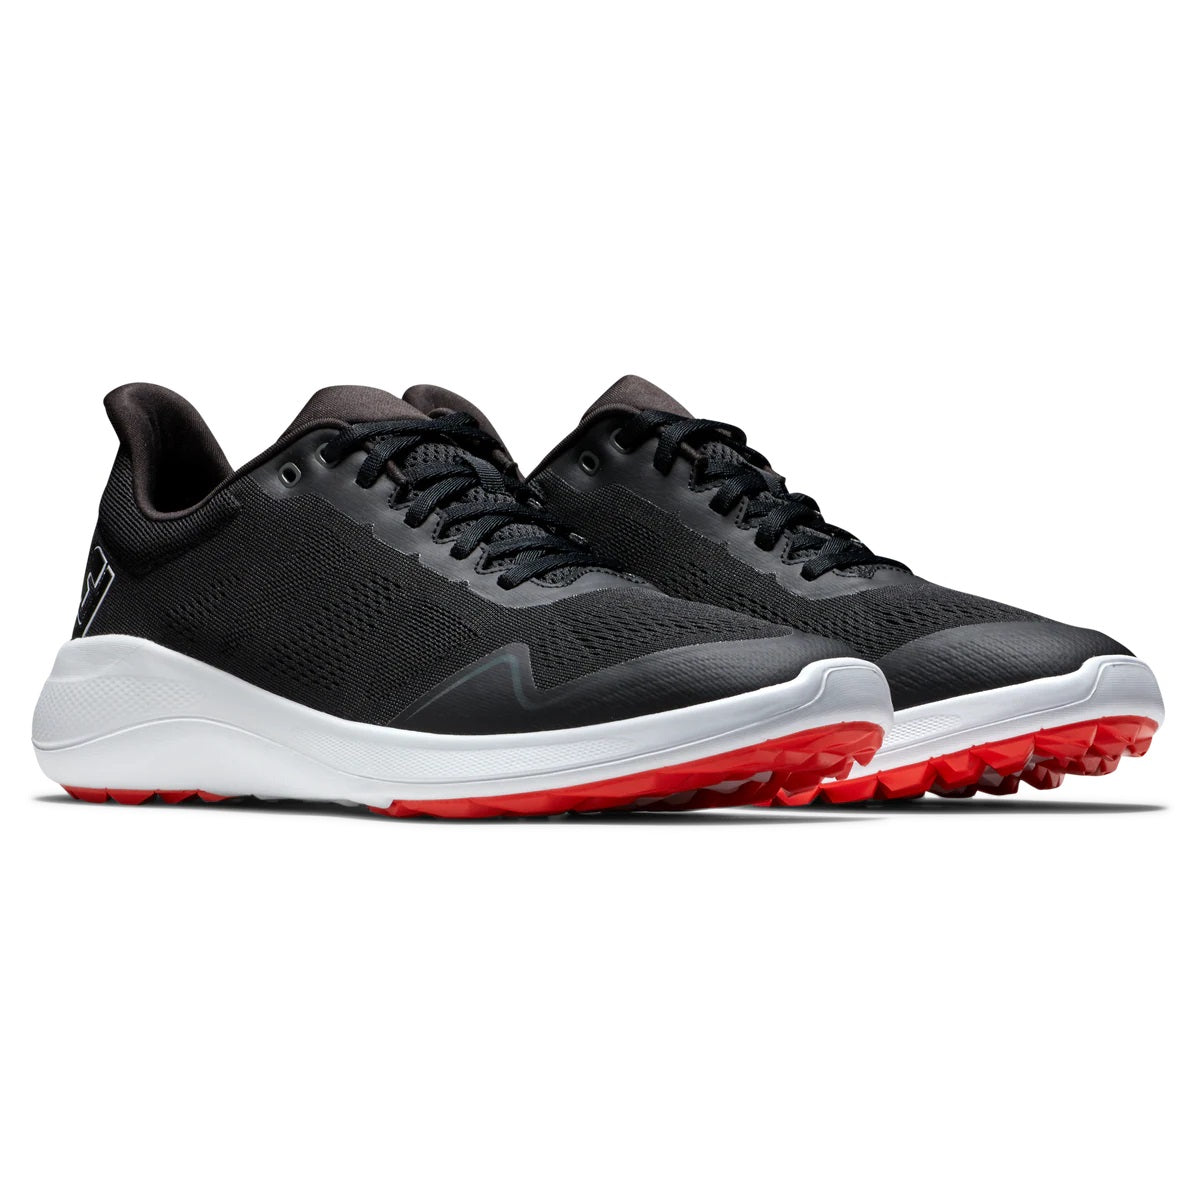 vi mus eller rotte jord FootJoy Flex Golf Shoes - Black/White/Red | Golf Direct Now -  GolfDirectNow.com